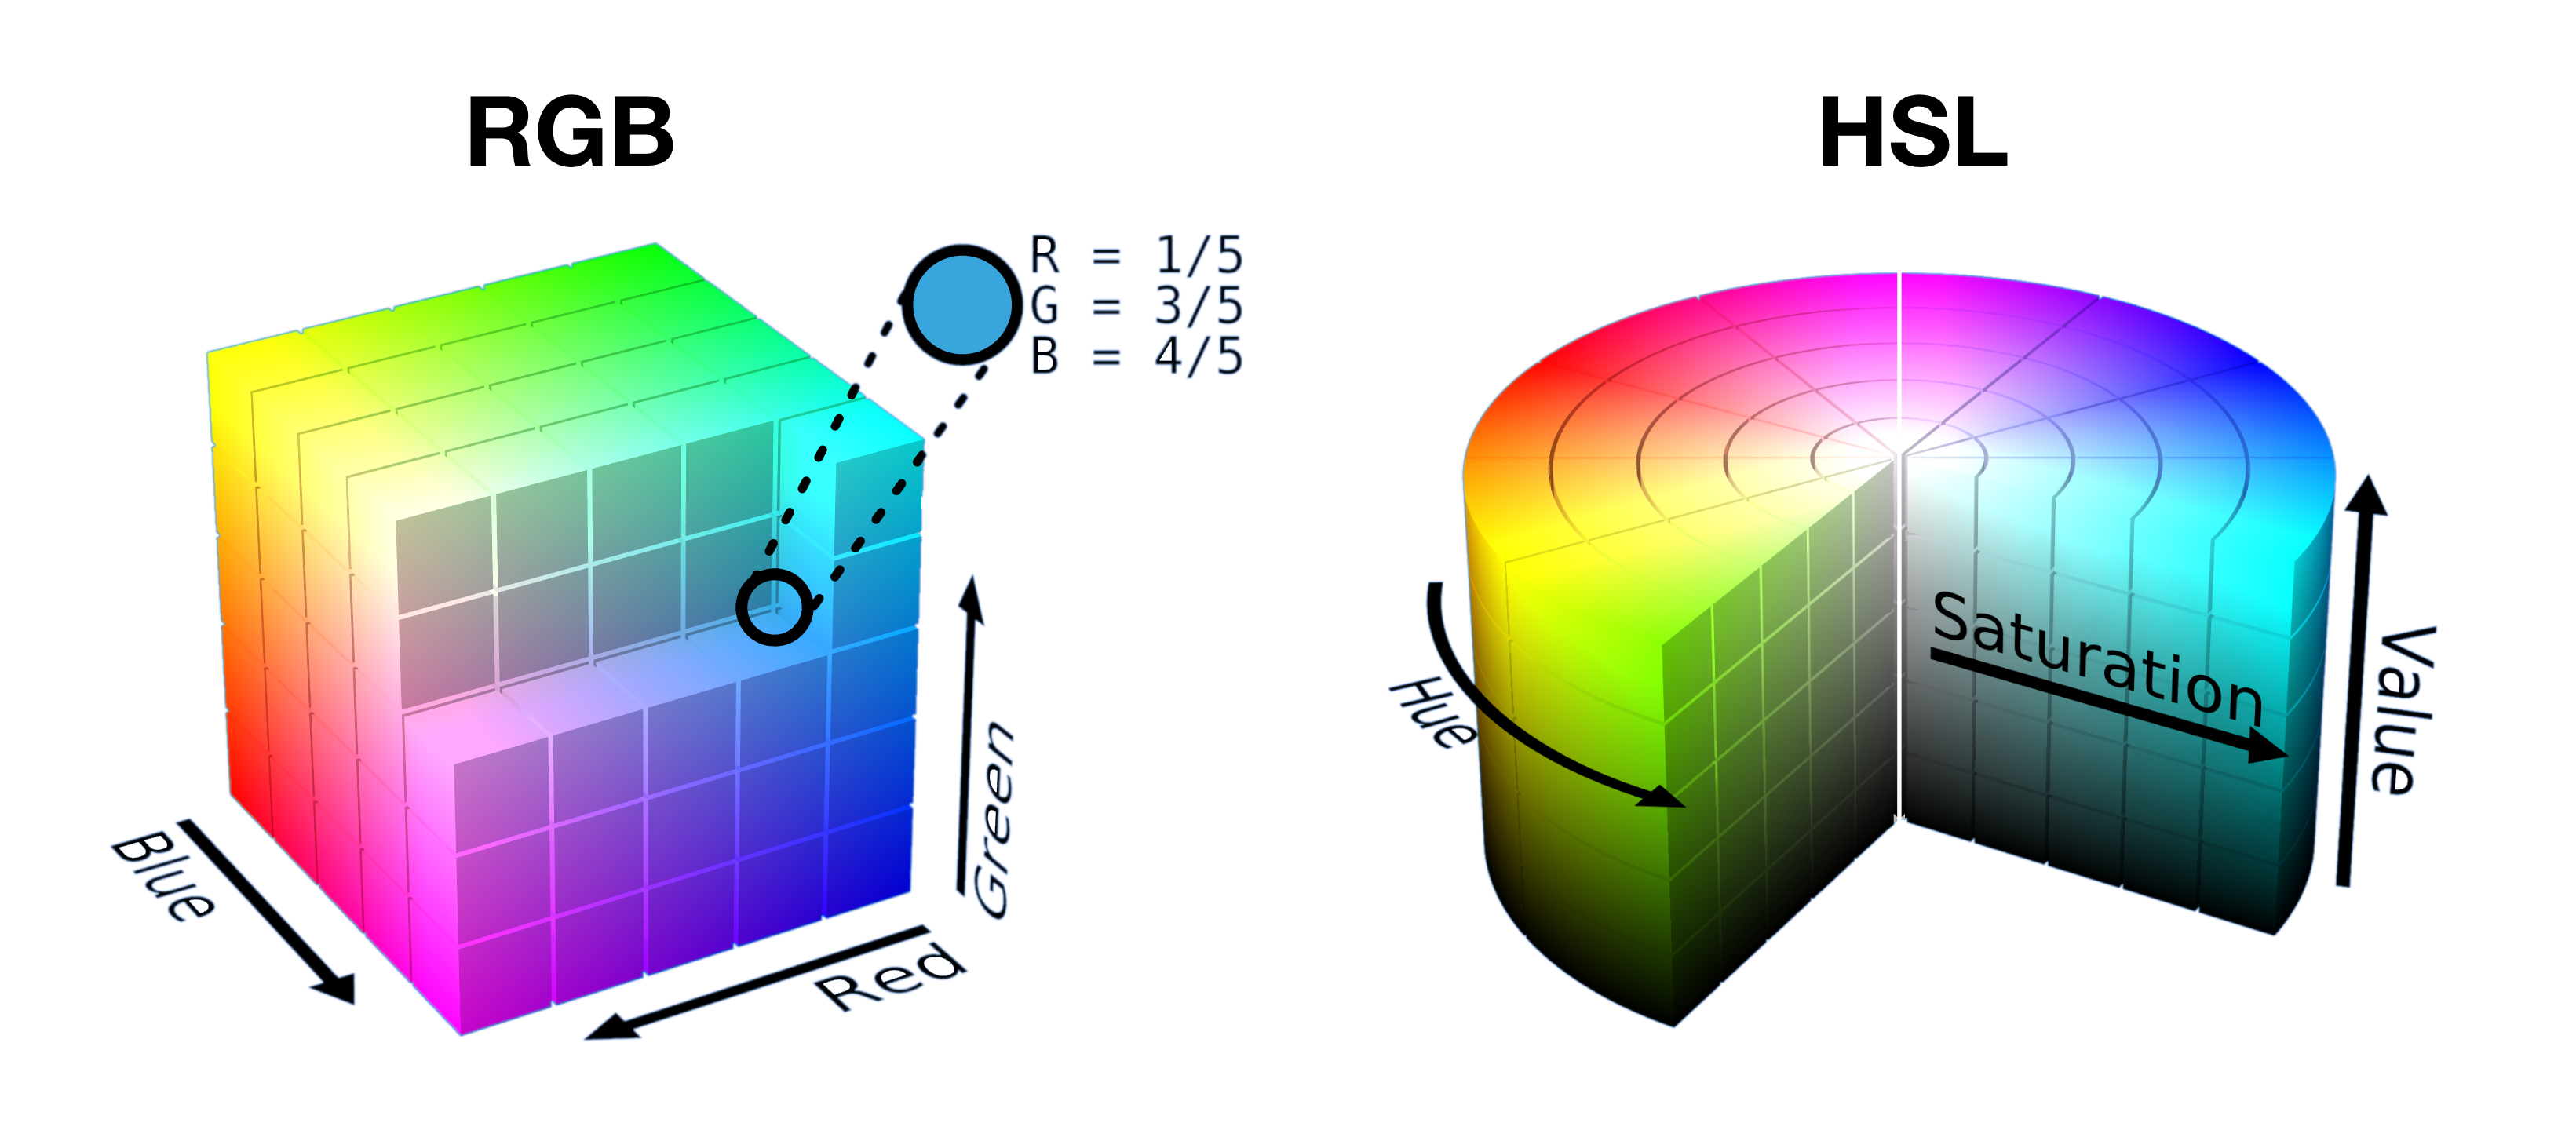 Kubus RGB setengah potongan yang terbuka dan diiris ke dalam silinder HSL ditampilkan berdampingan, untuk menunjukkan bagaimana warna dikemas ke dalam bentuk di setiap ruang.